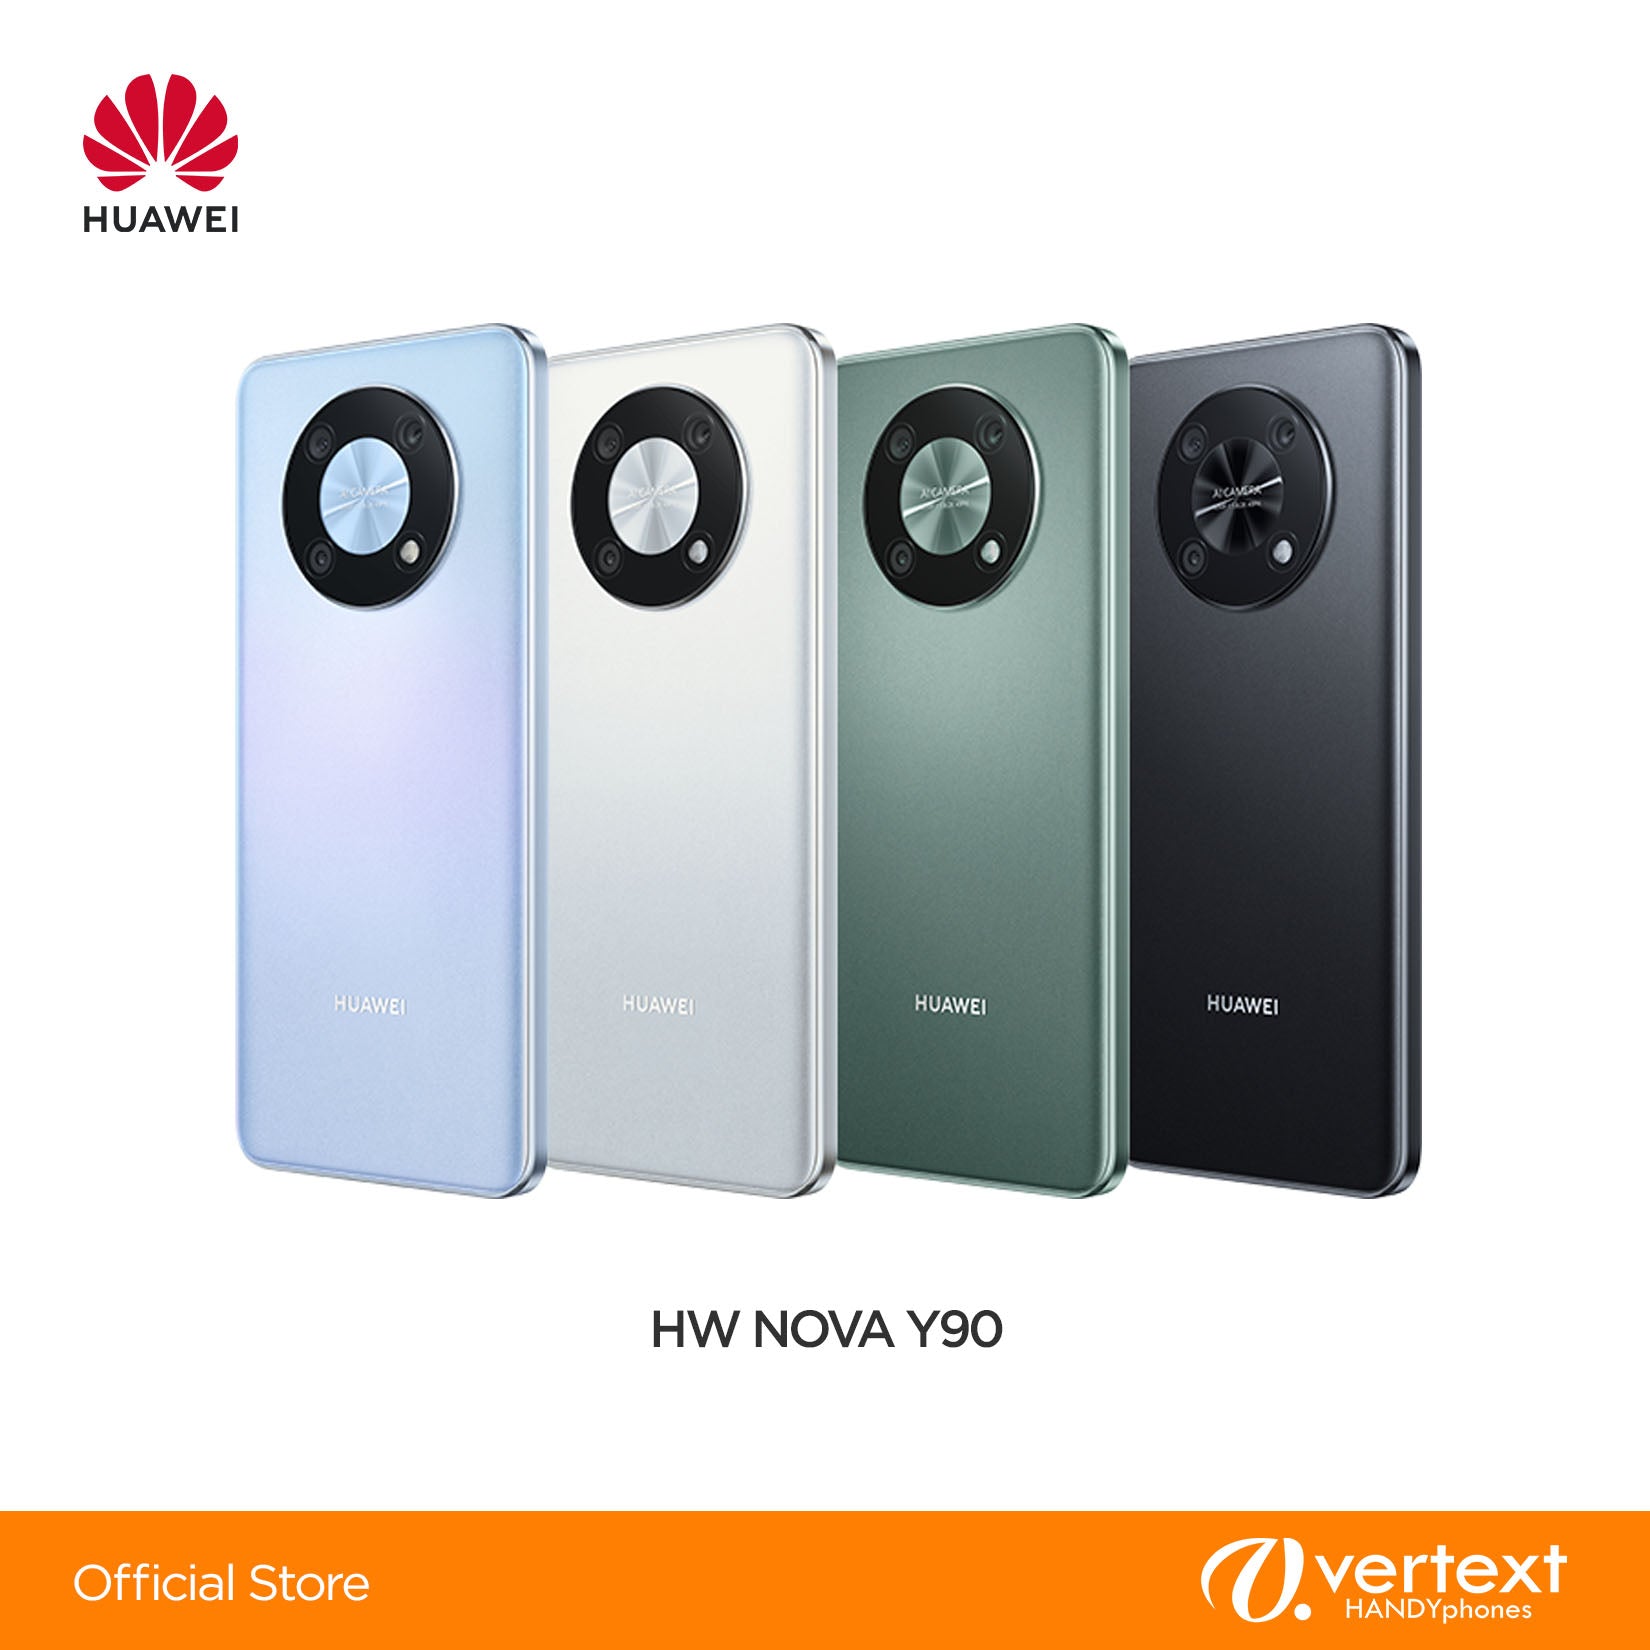 Huawei NOVA Y90